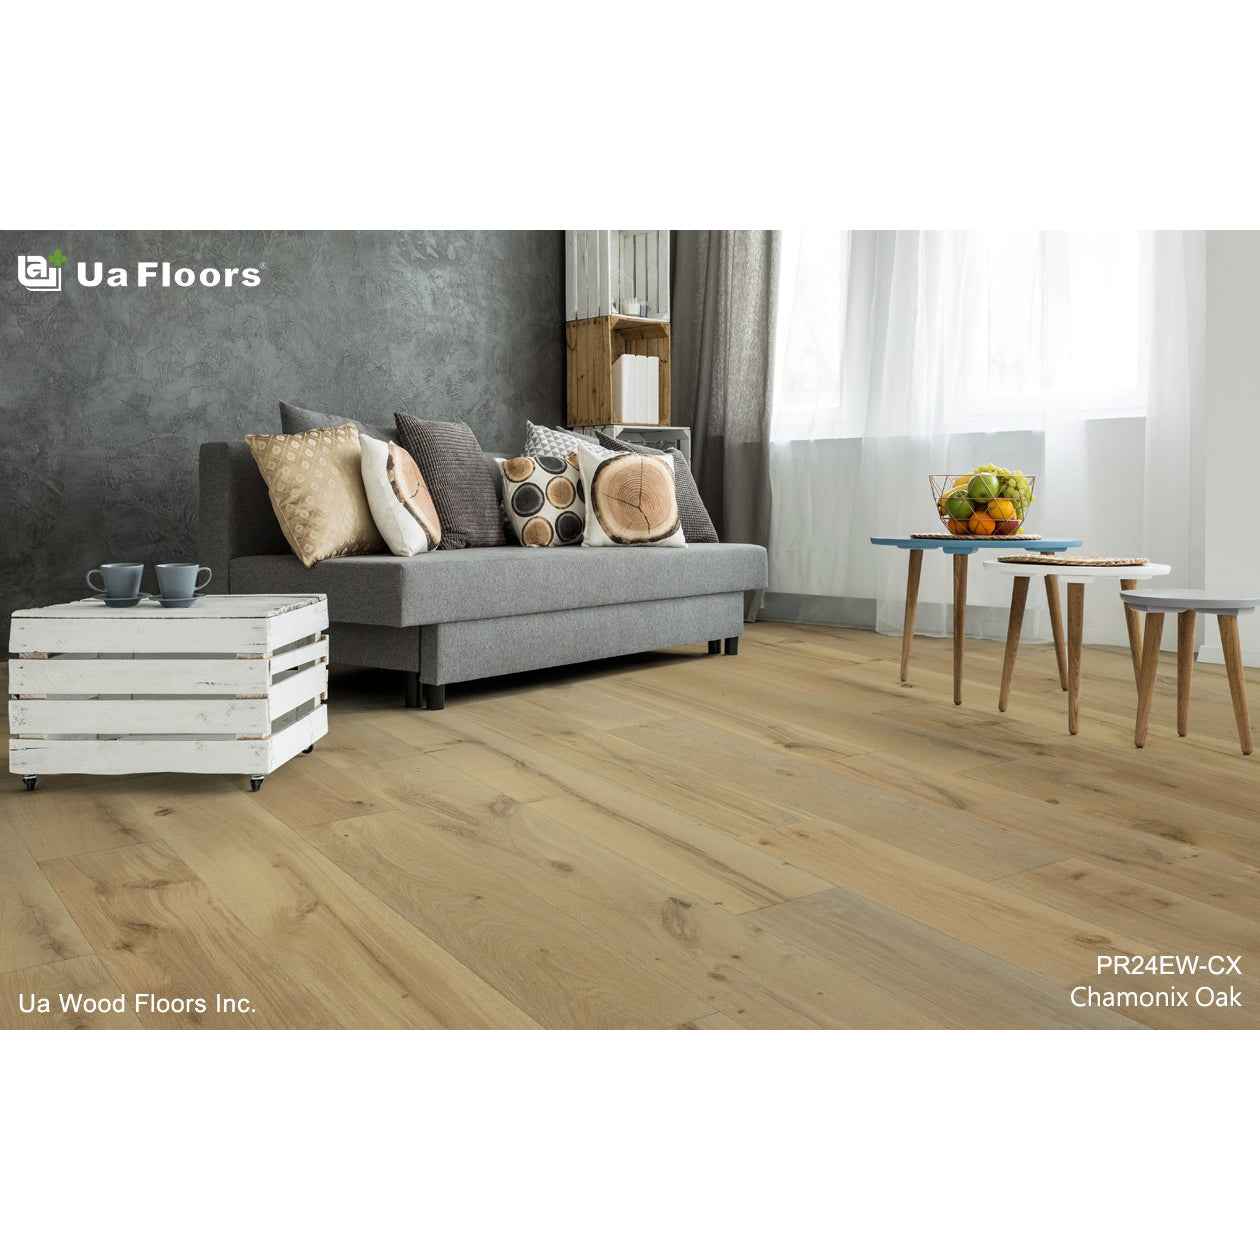 Ua Floors - The Parisian Series - Chamonix Euro Oak